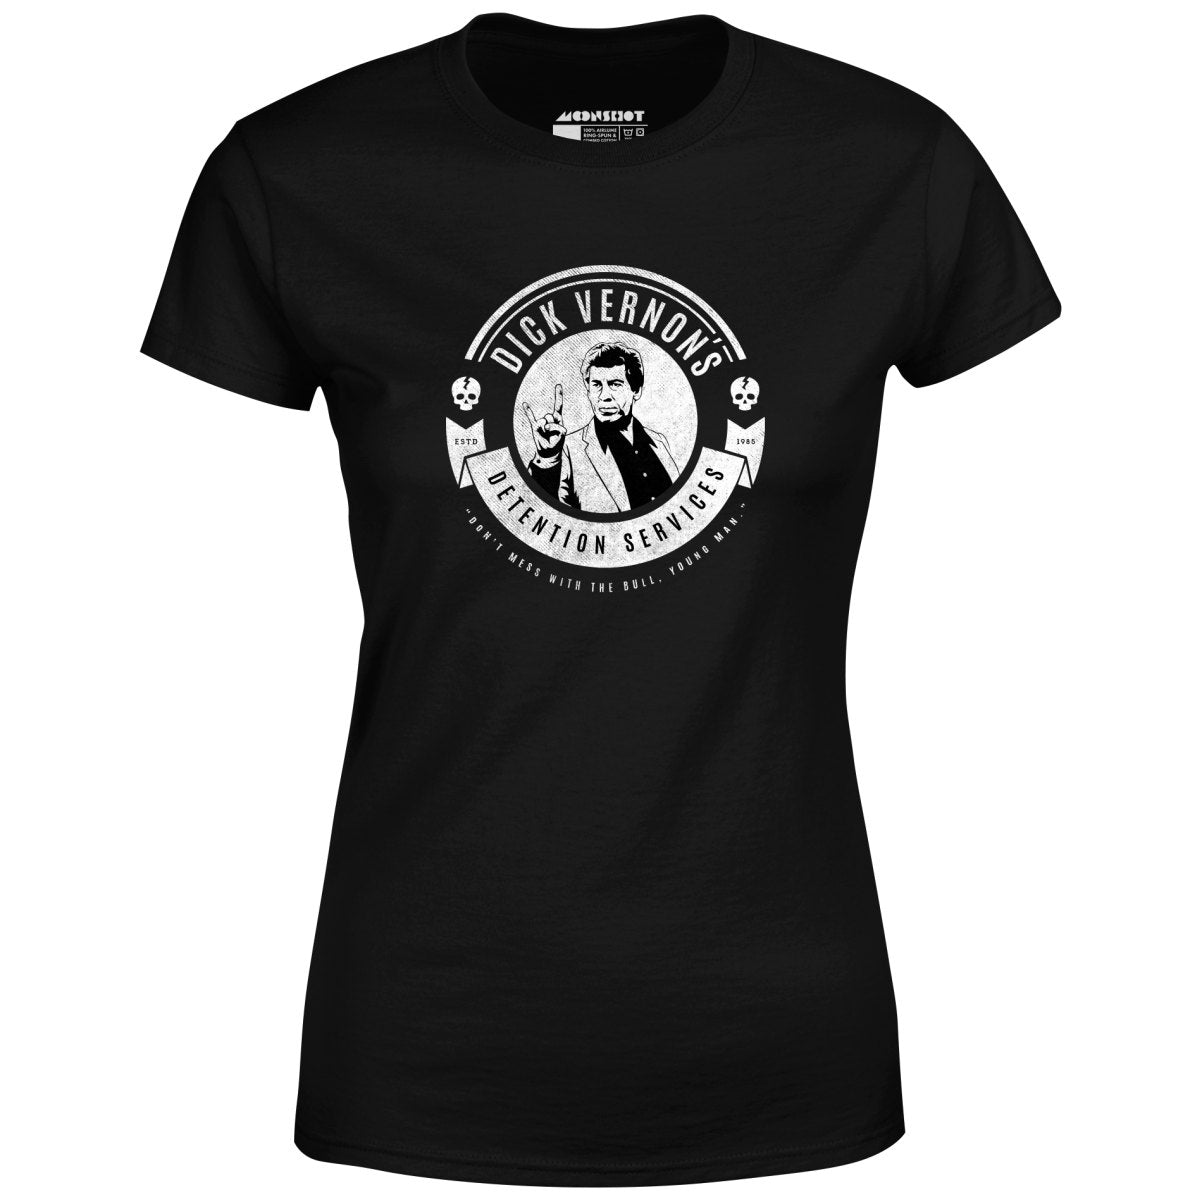 Dick Vernon's Detention Services - Women's T-Shirt